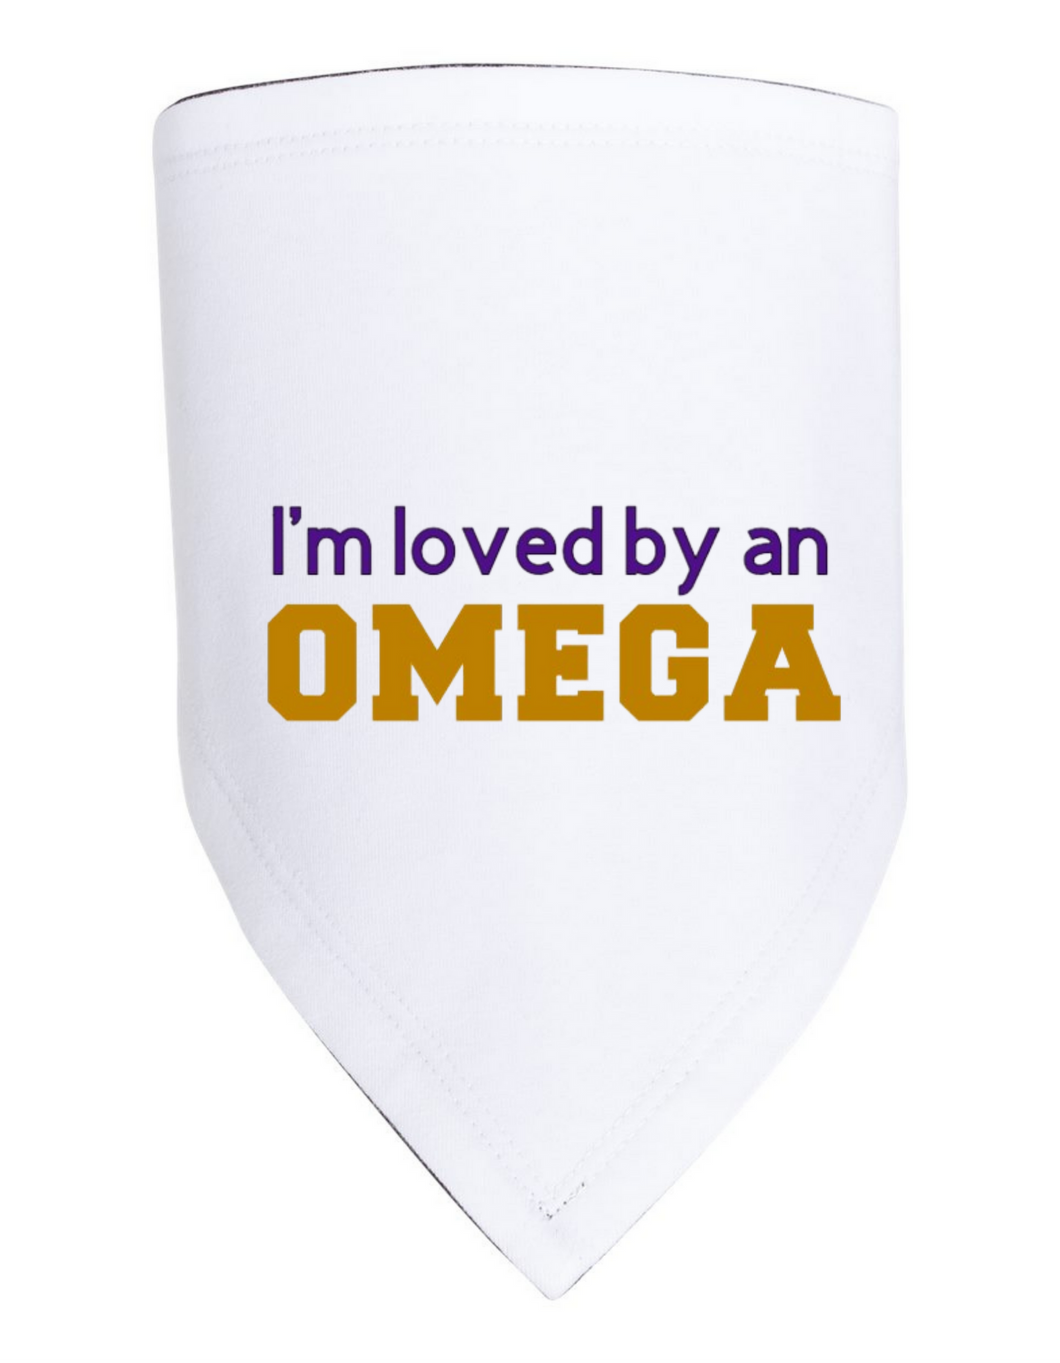 I'm Loved by an Omega Bib